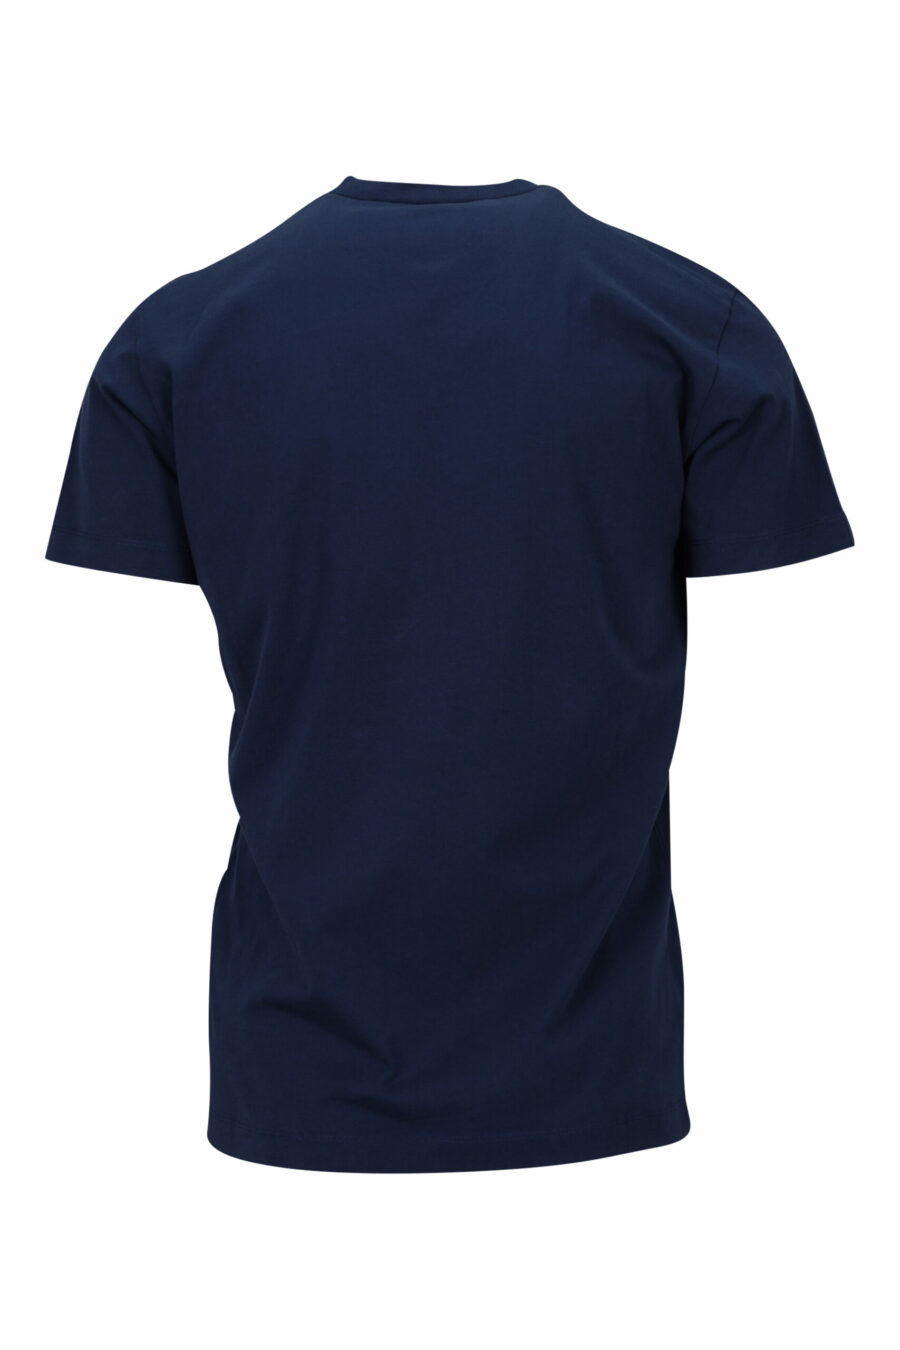 T-shirt azul escura com minilogo "ceresio 9, milano" - 8054148505196 1 scaled